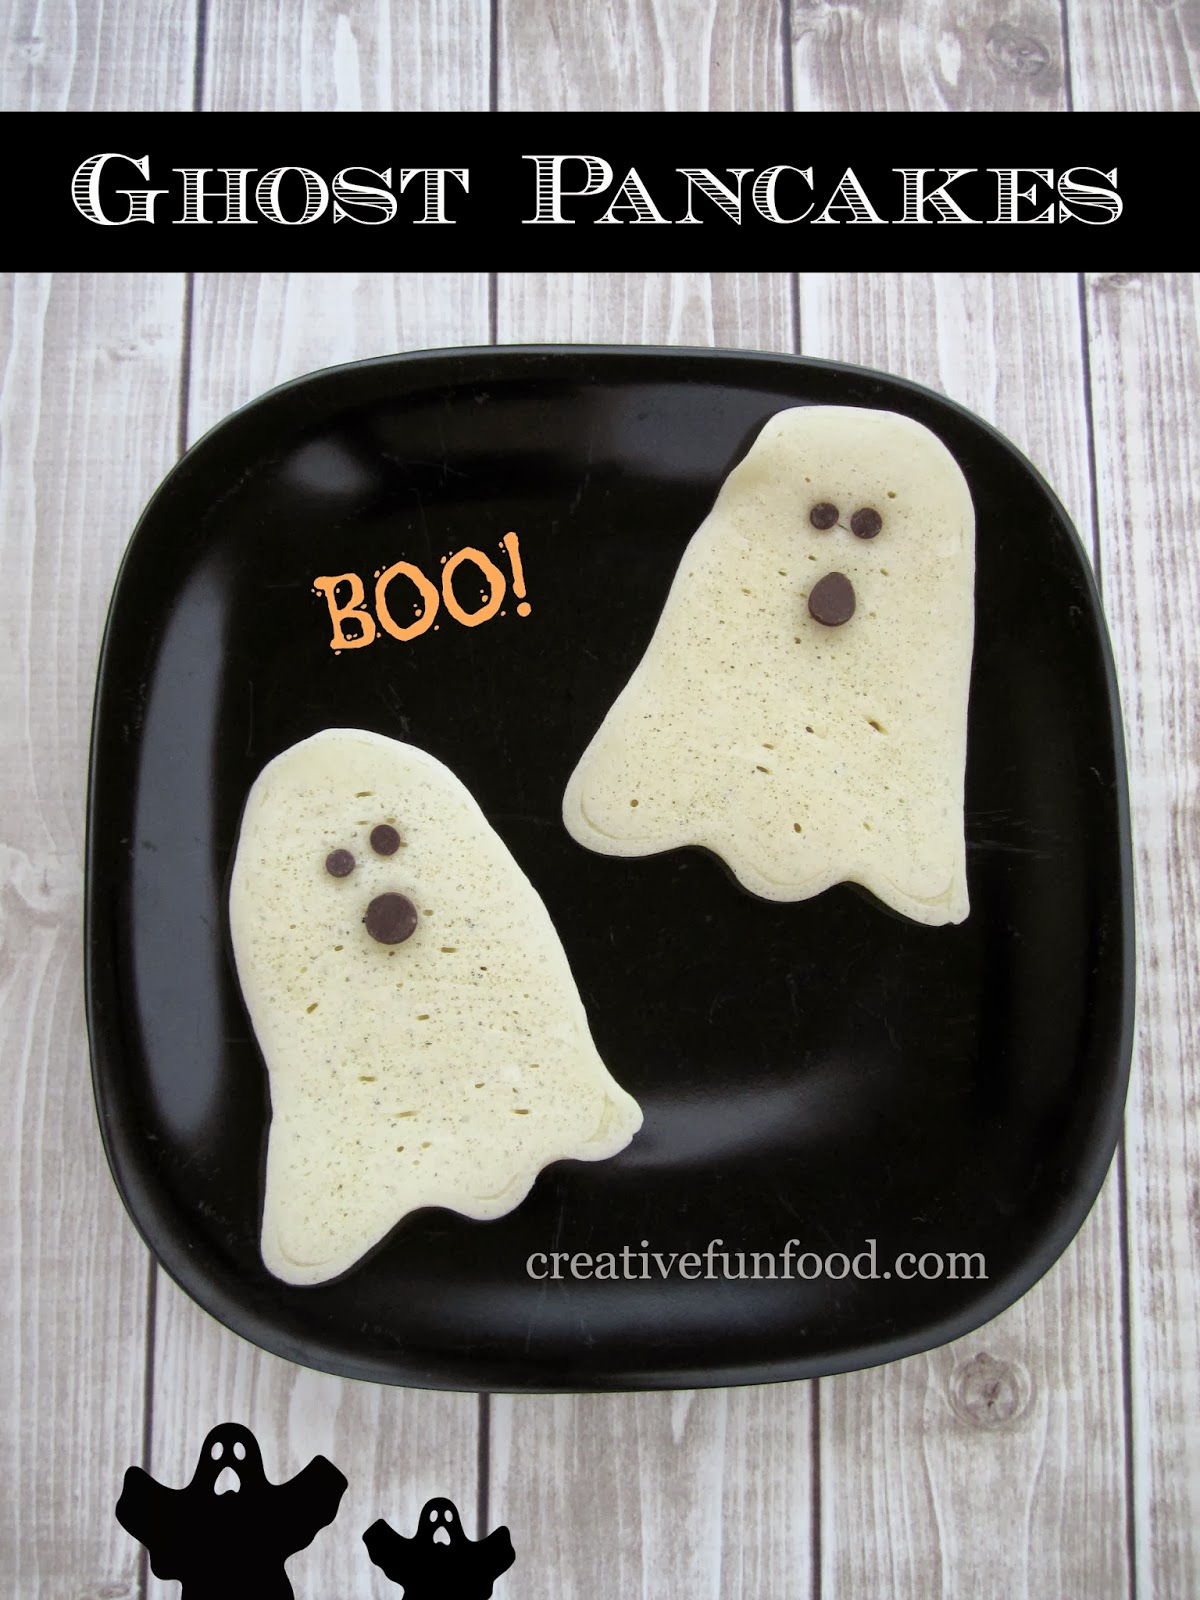 Creative Food: Ghost Pancakes